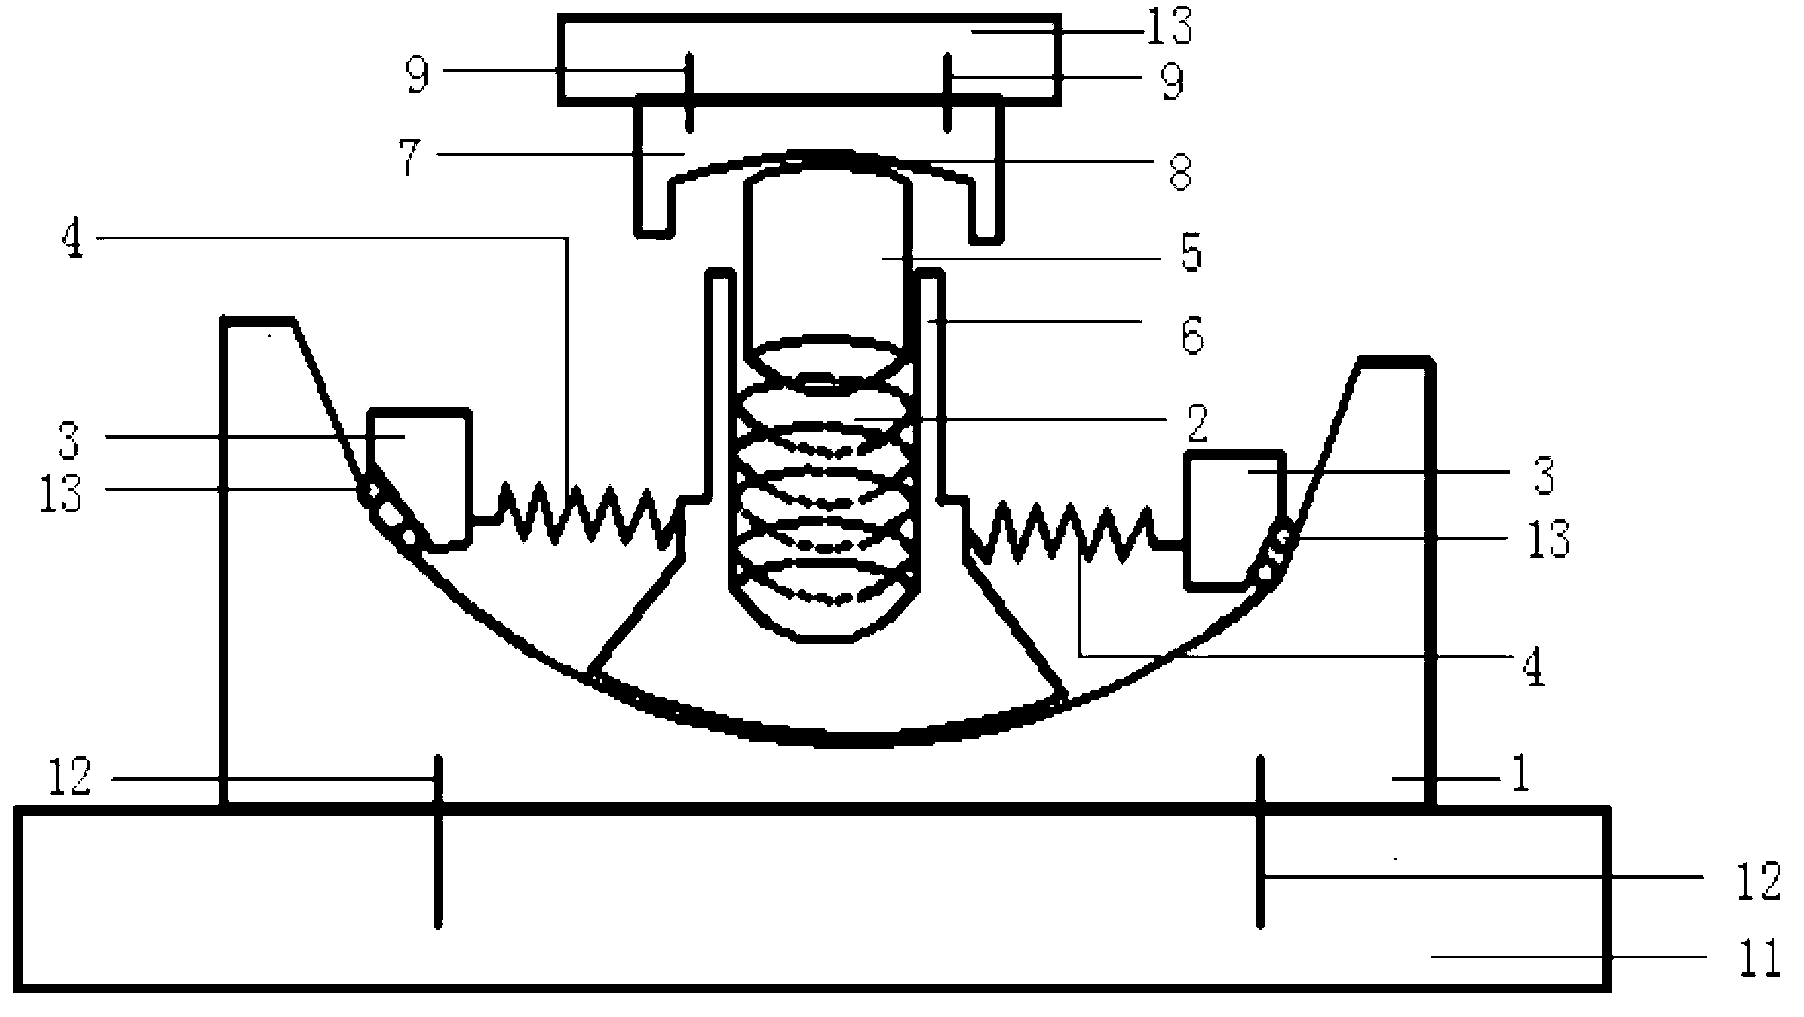 Three-dimensional composite friction pendulum vibration isolator based on nonlinear energy trap